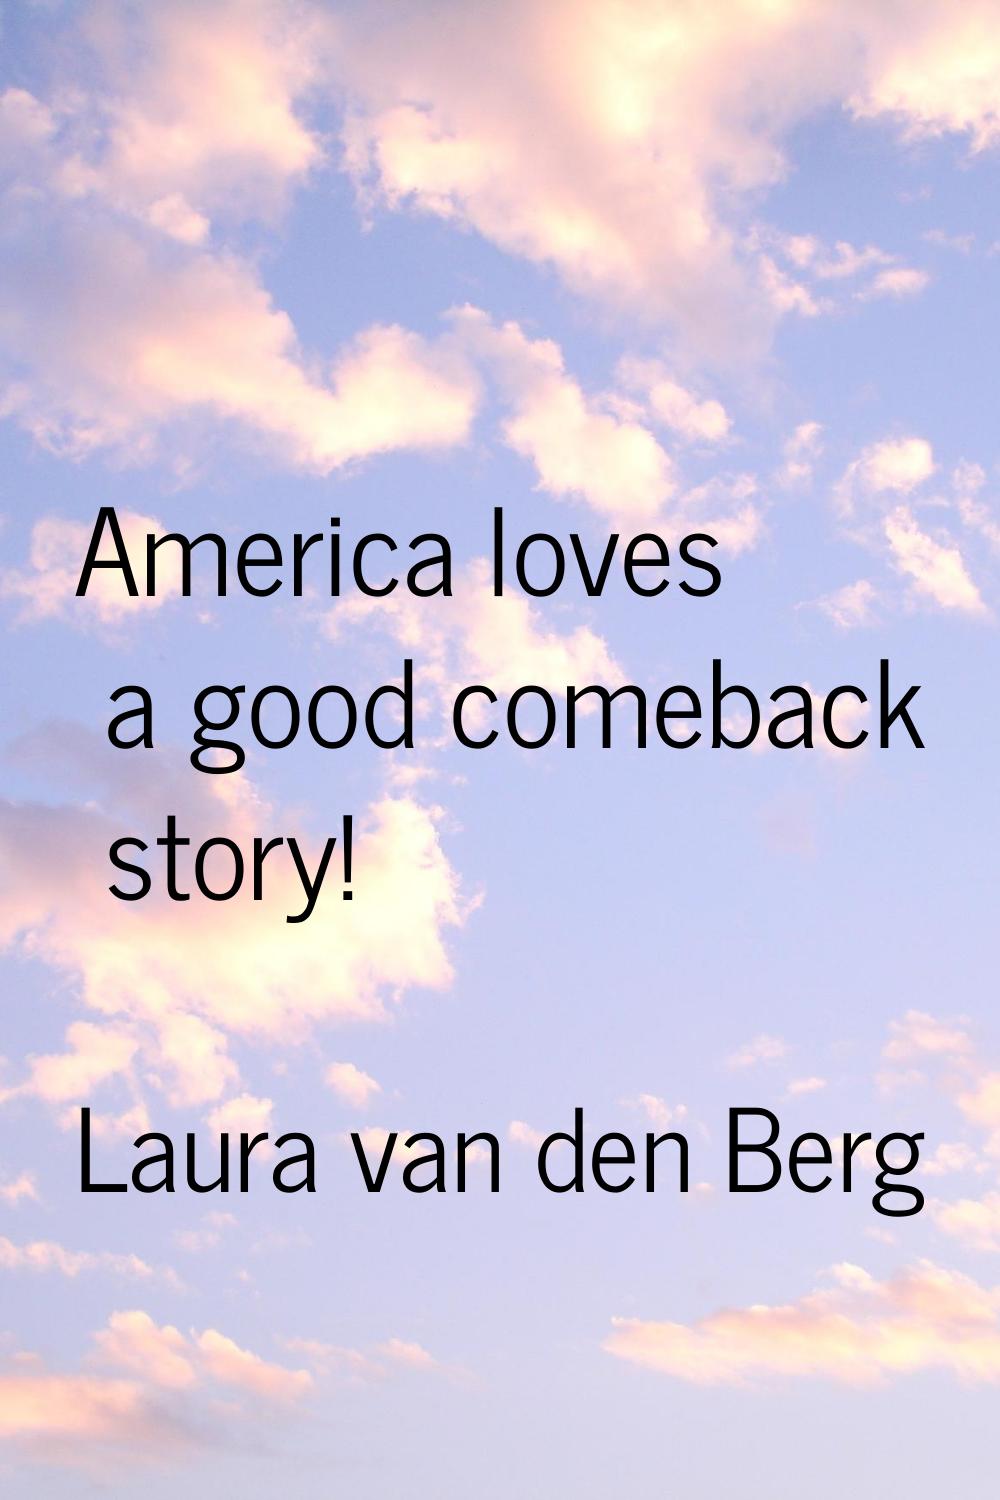 America loves a good comeback story!